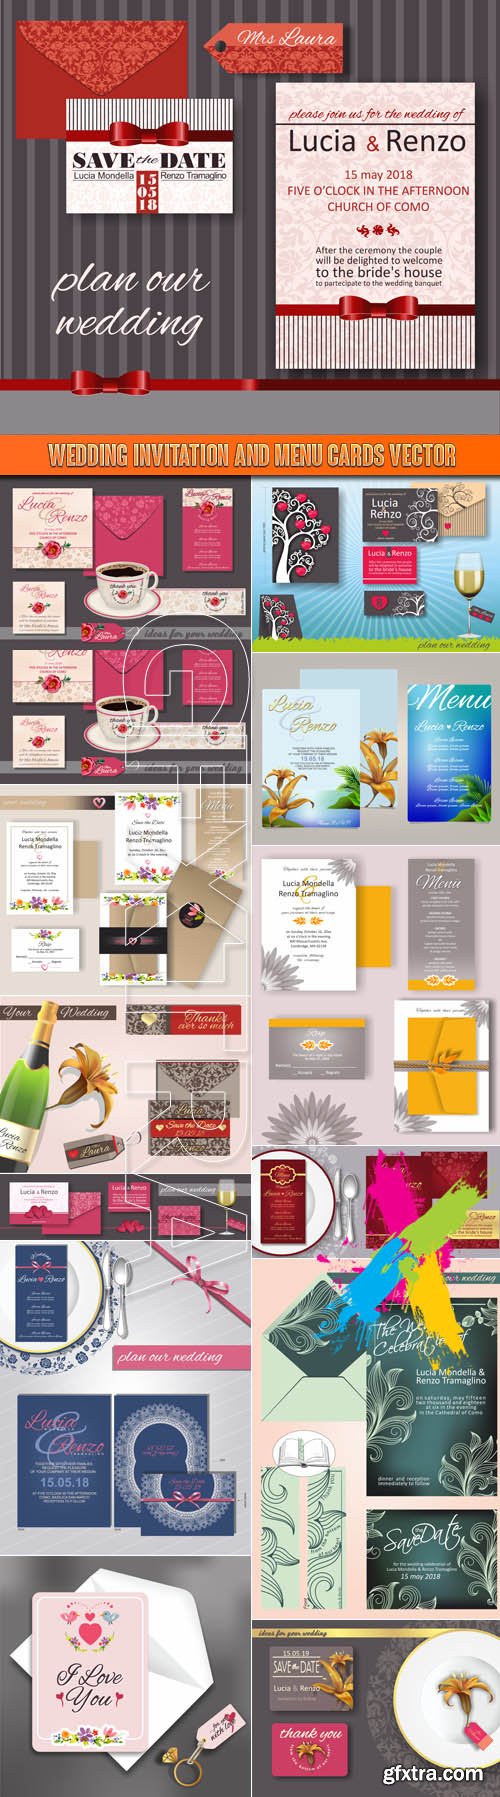 Wedding invitation and menu cards vector